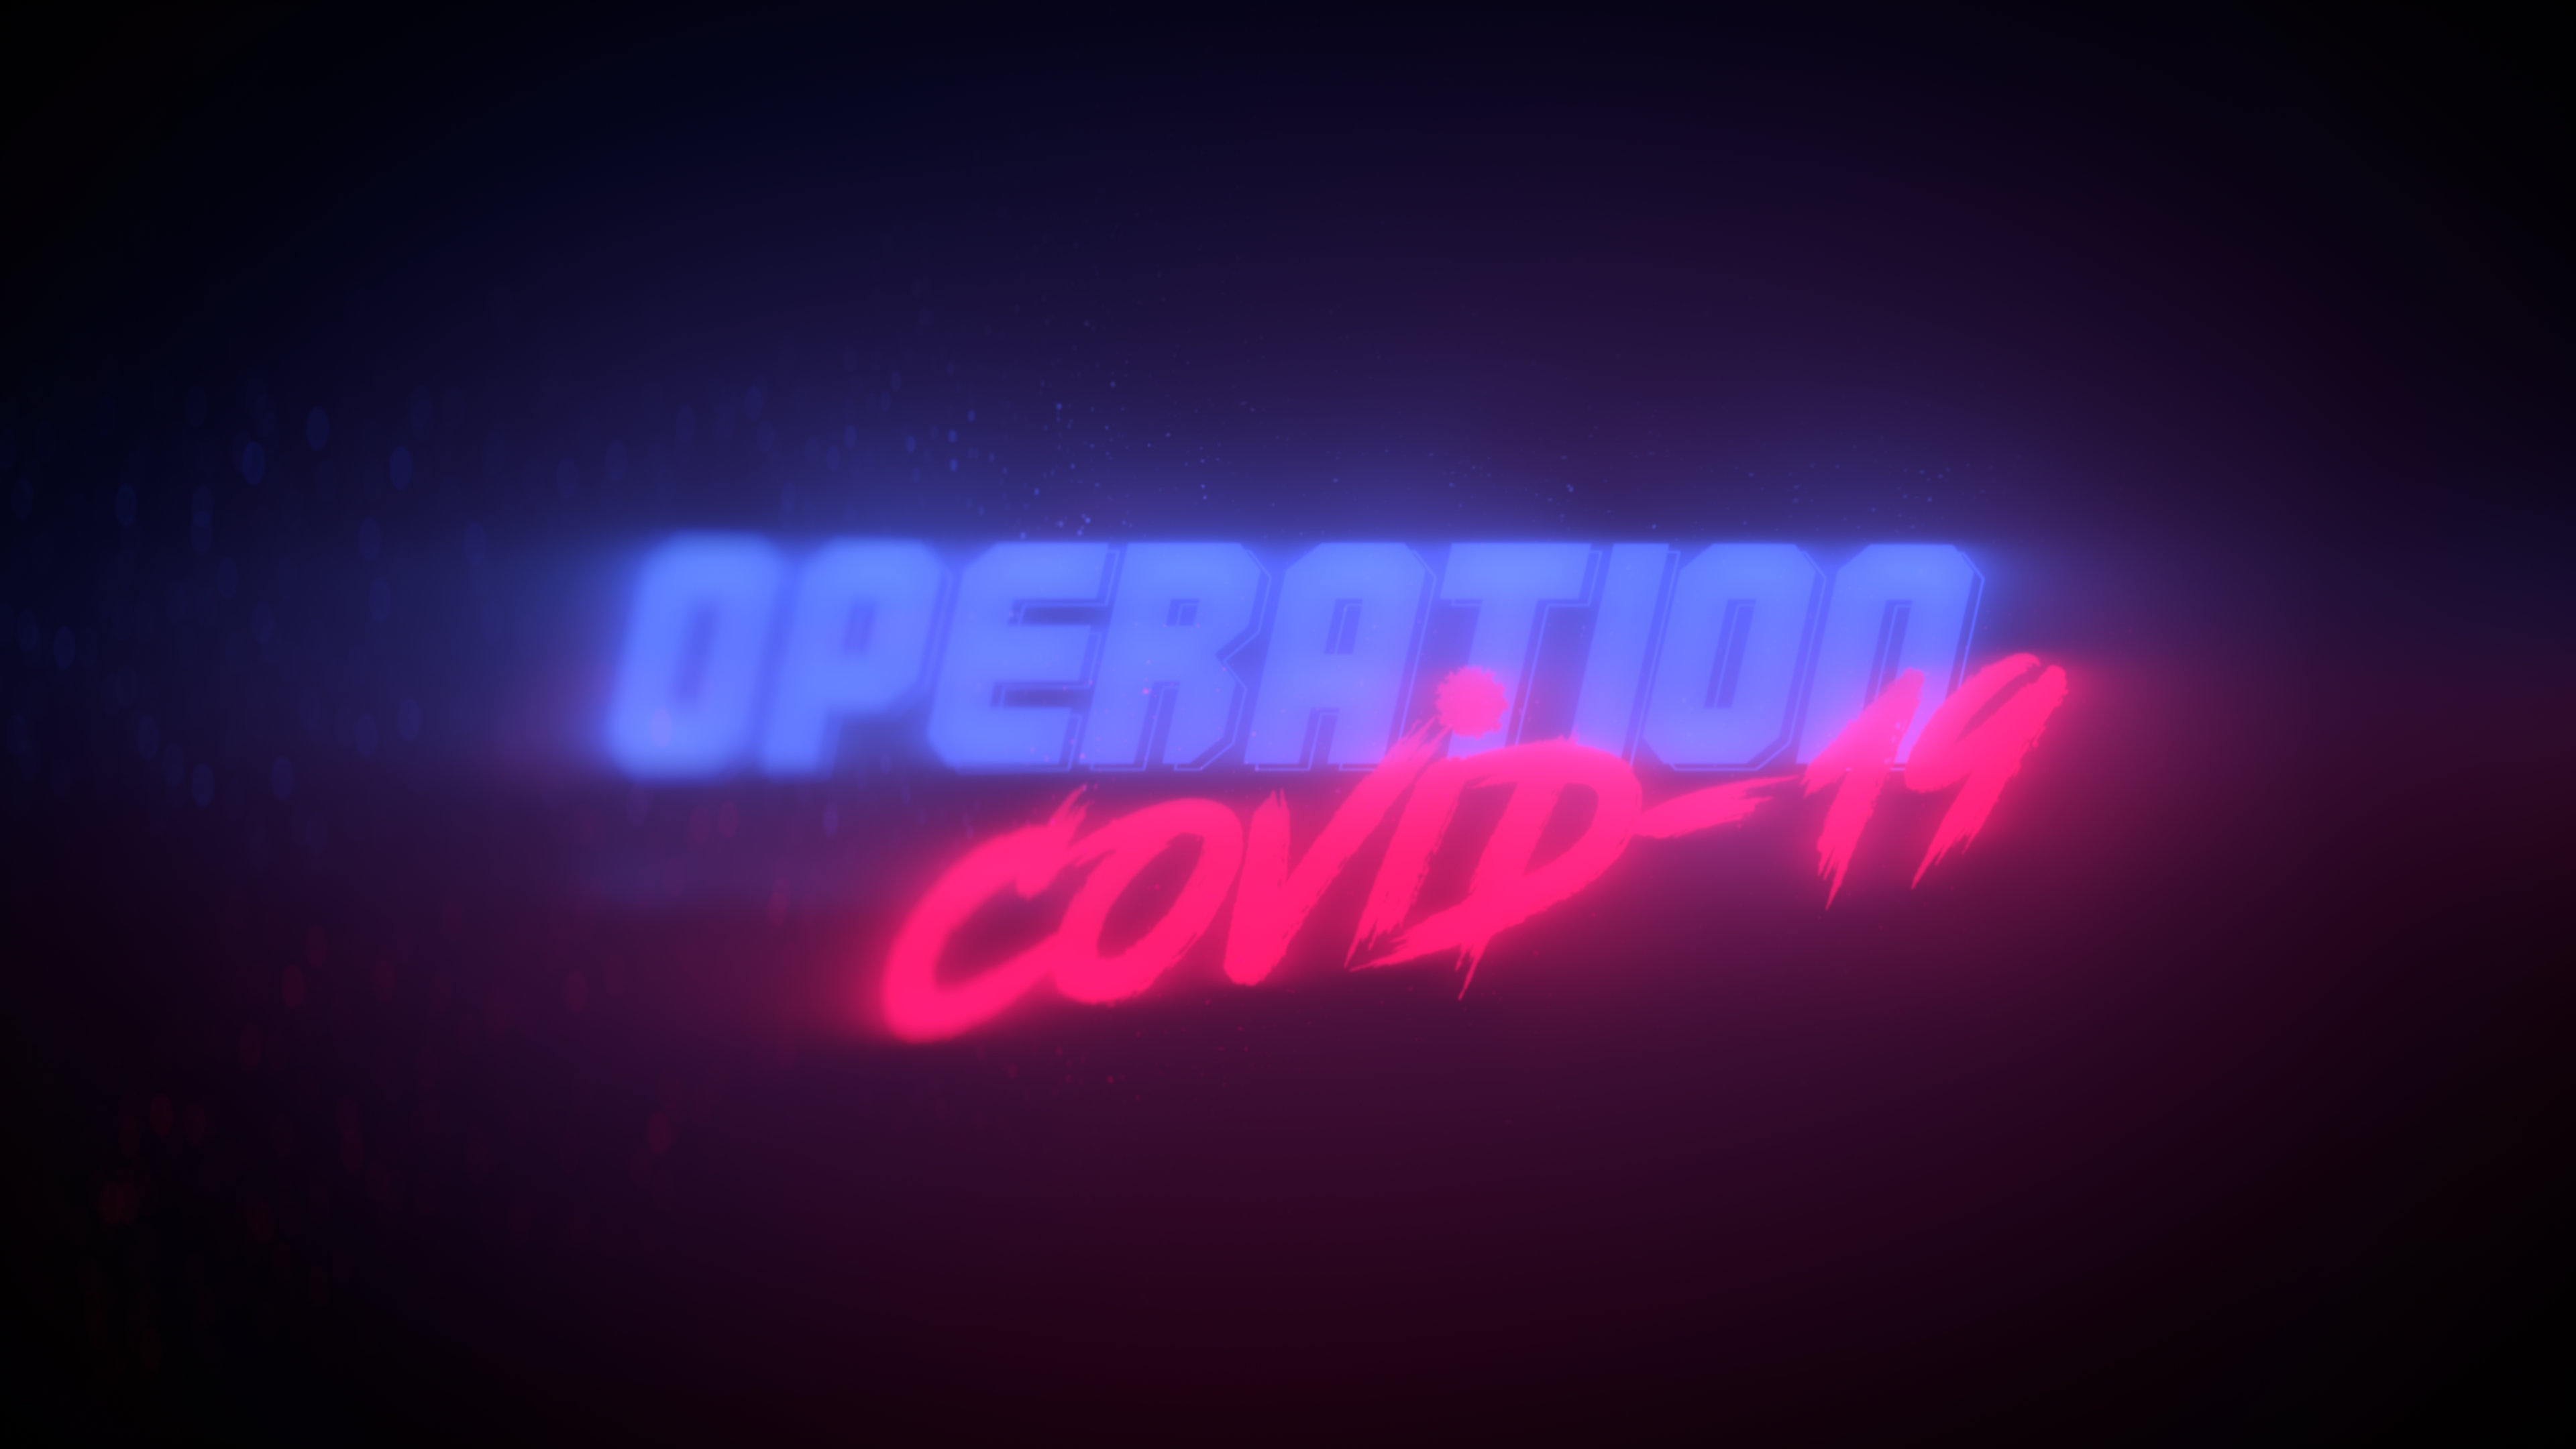 Operation COVID-19